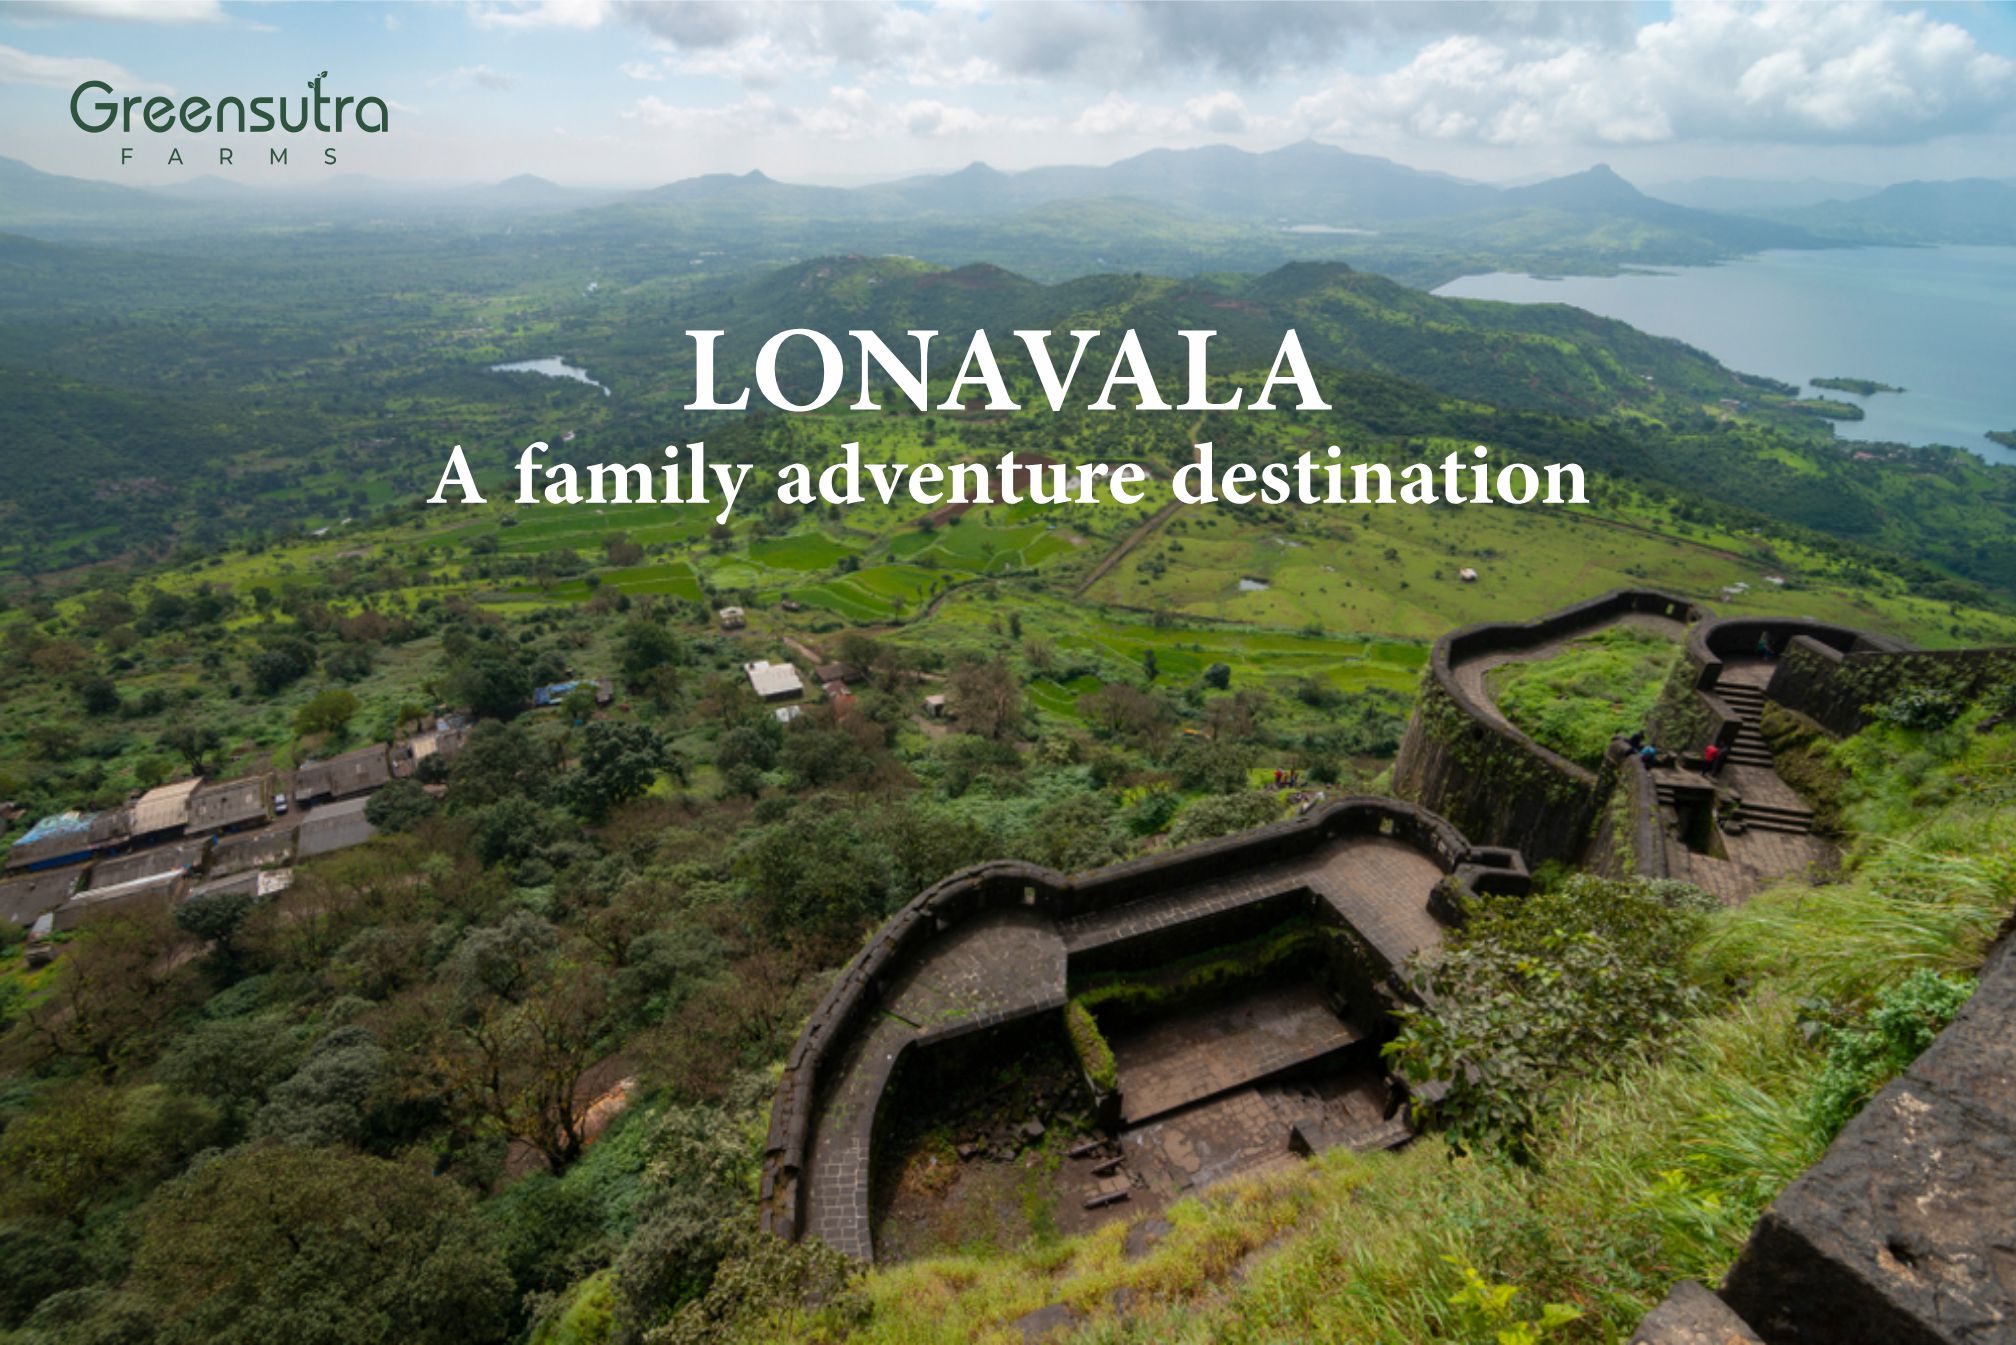 Lonavala – a family adventure destination with activities